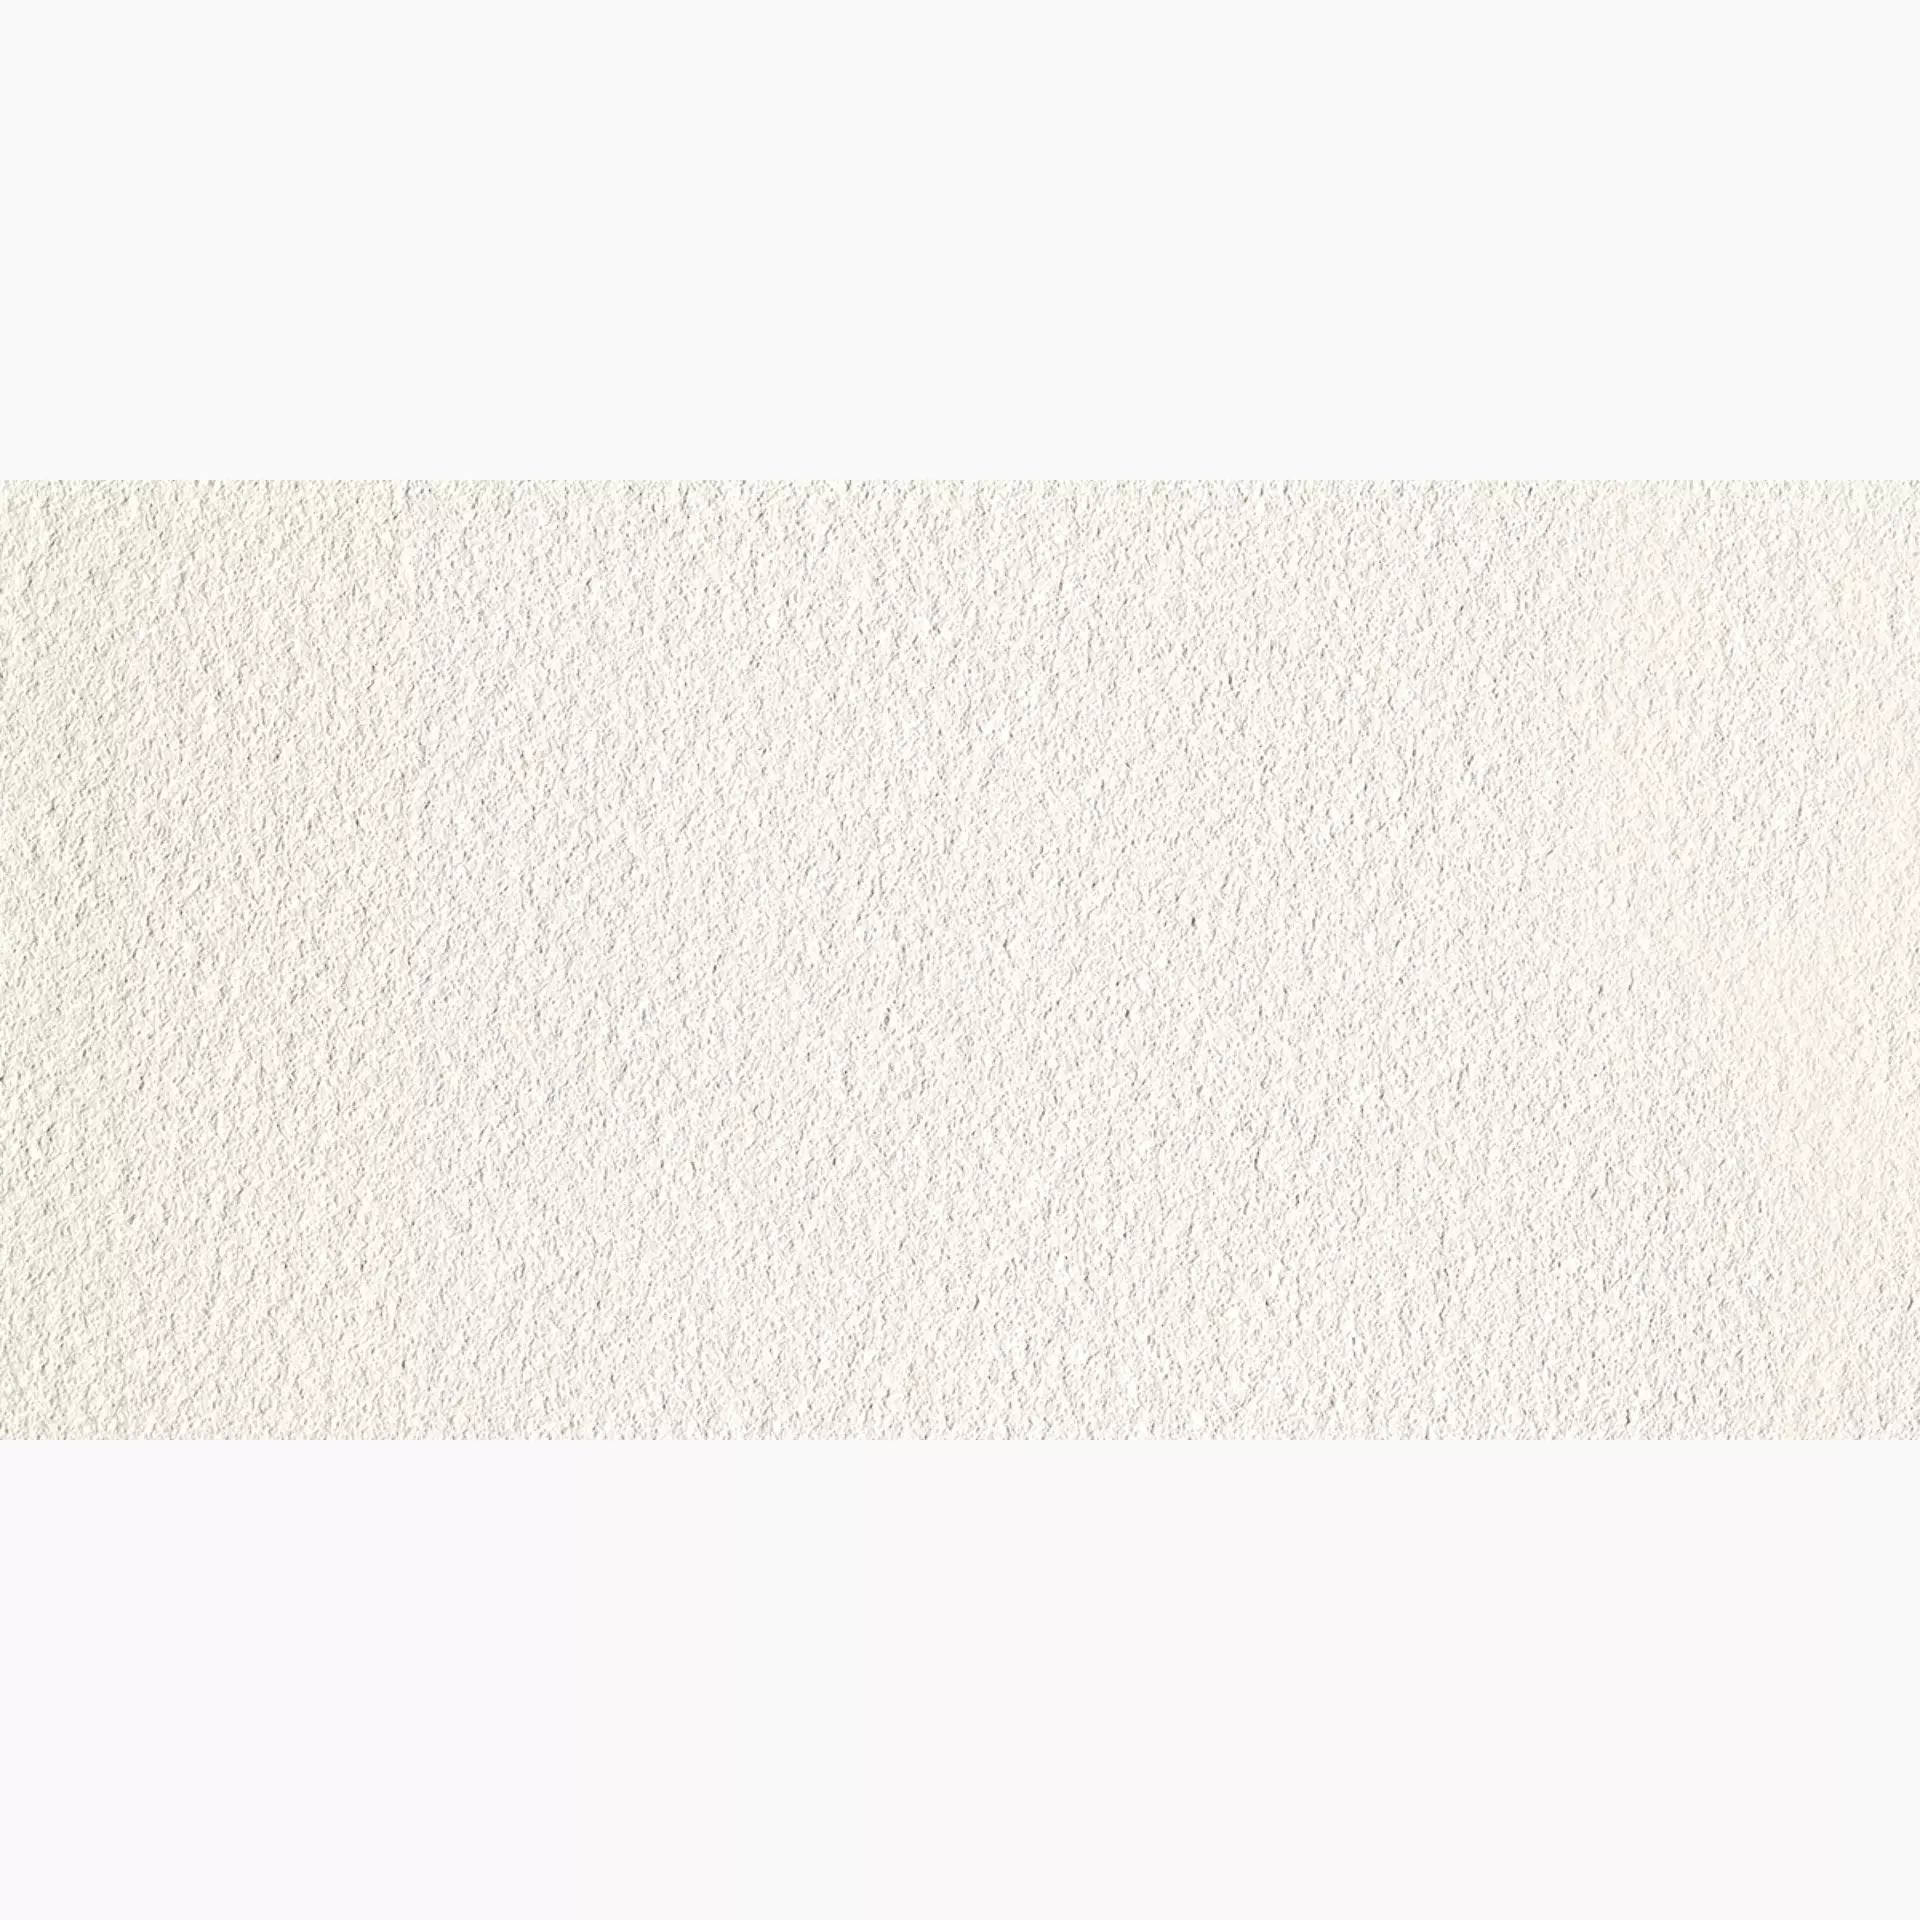 Gigacer Light Bianco Scolpito Bianco 6LIGHT3060SCOLPITO matt 30x60cm 6mm